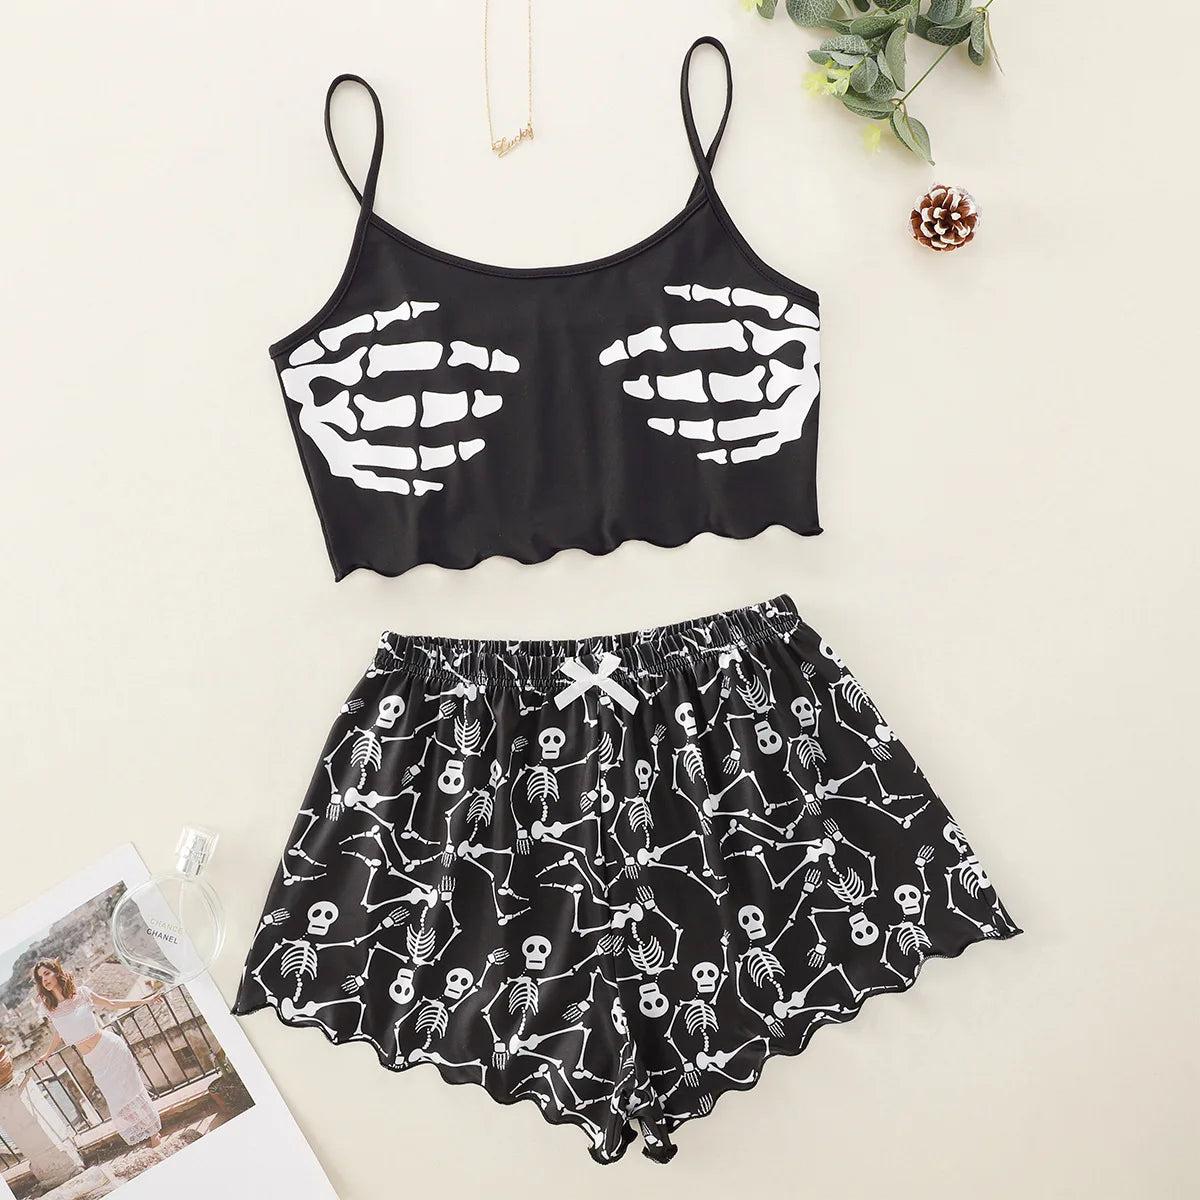 Black Goth Skeleton Print Shorts and Top